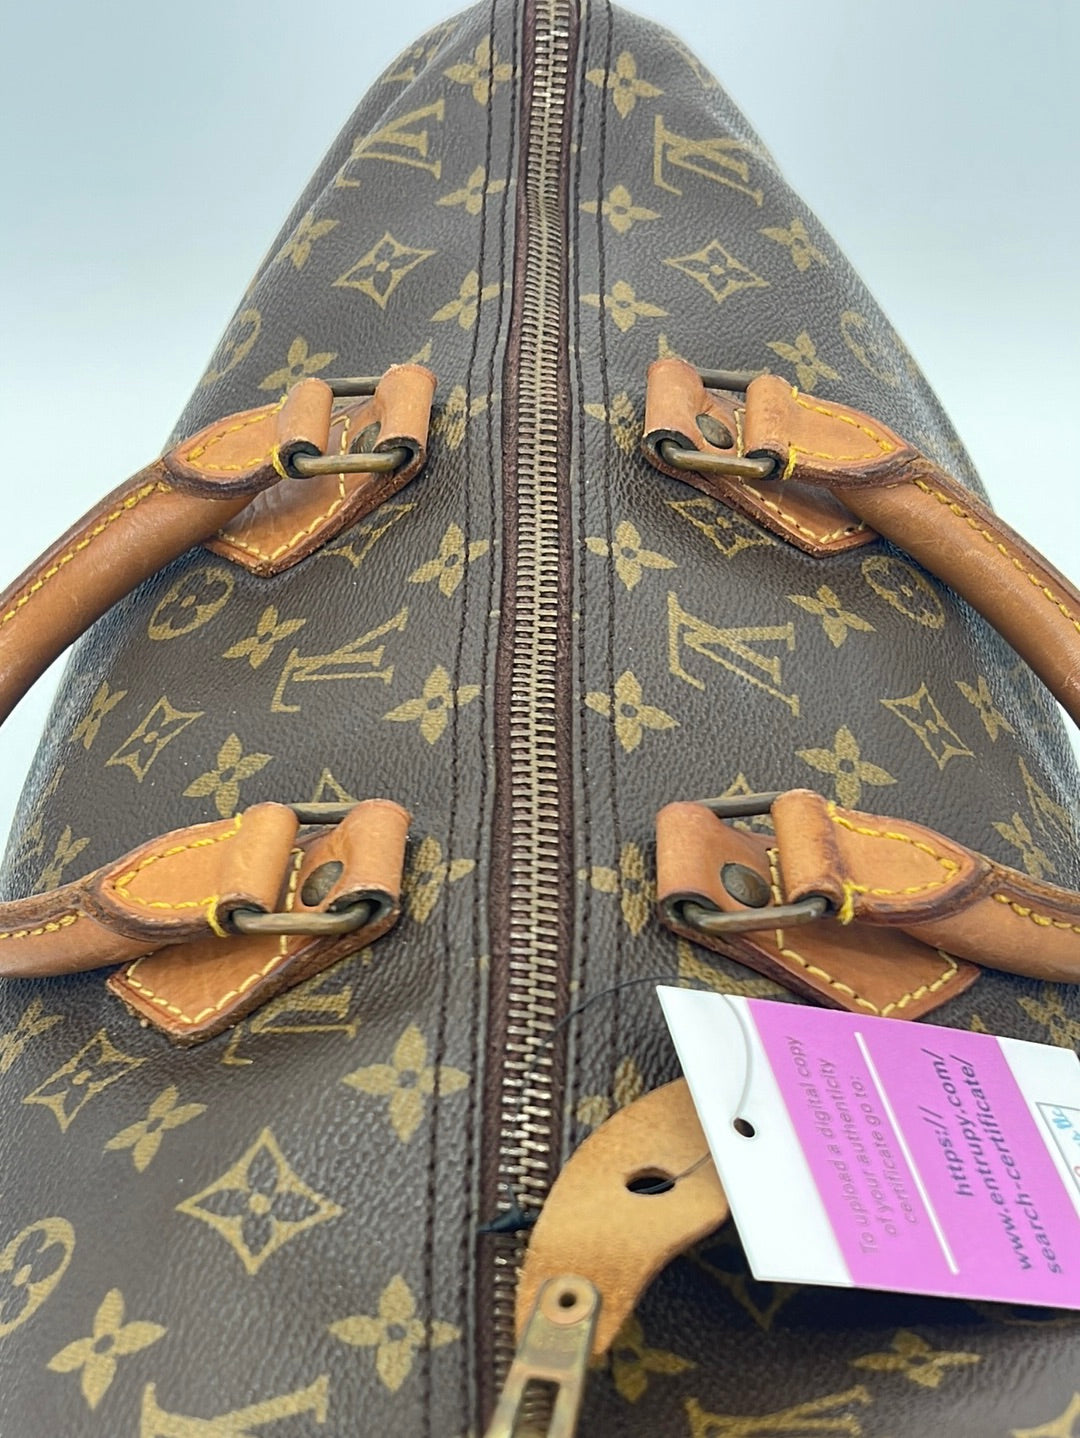 Louis Vuitton Vintage Speedy 40 Bag